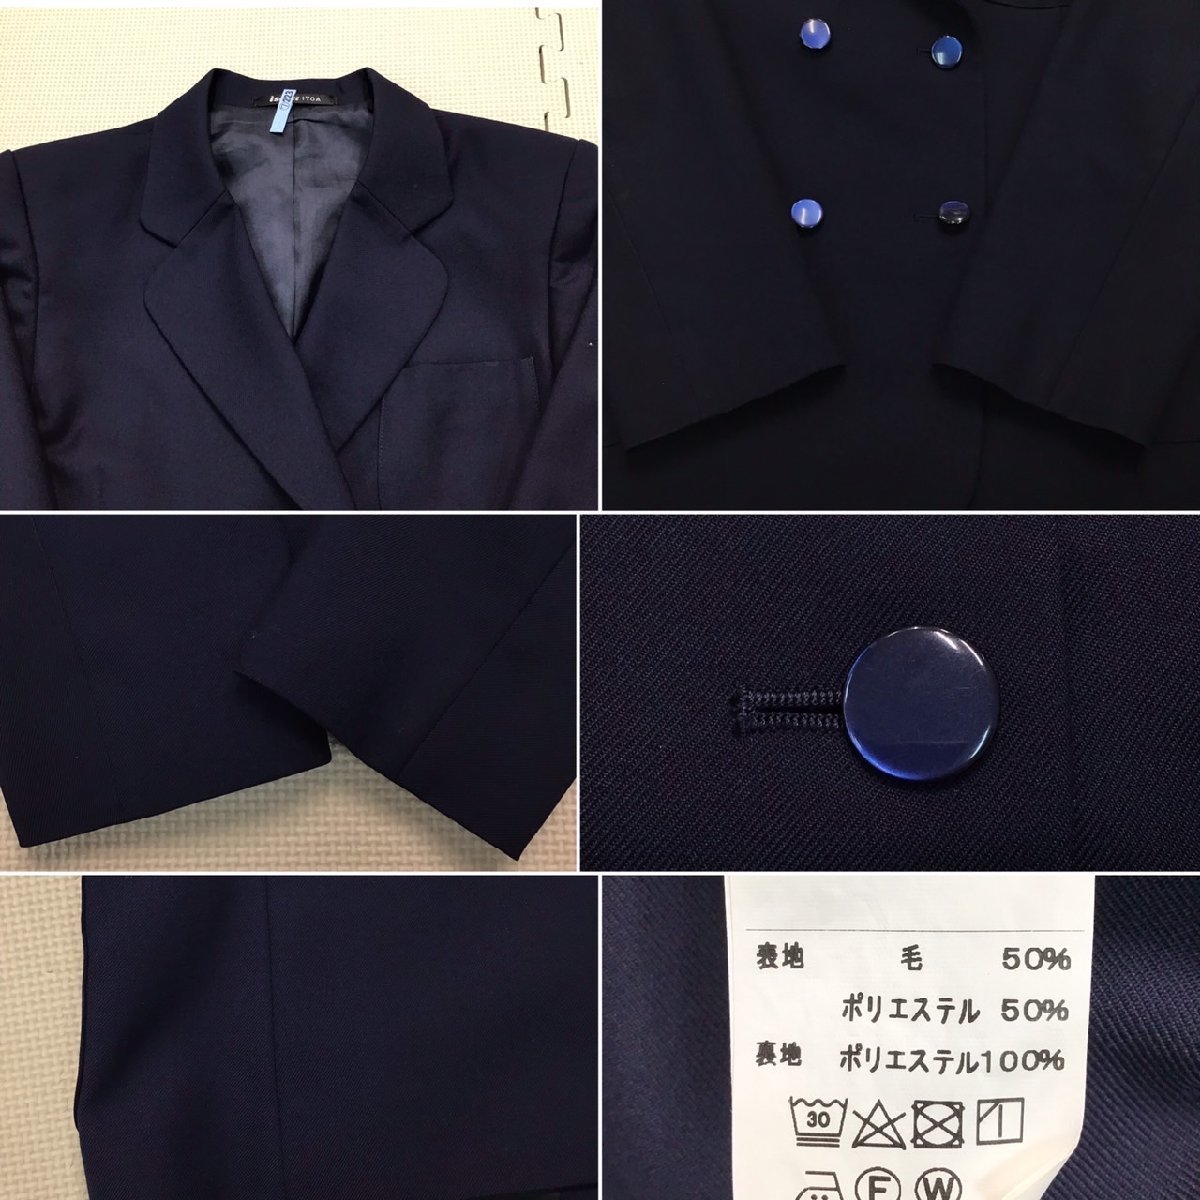 OT154-3 ( used ) Tochigi prefecture Utsunomiya city ... junior high school 6 point set /170A/W66/ blaser / the best / skirt / blouse /NIKKE/ uniform / woman student /. industry raw goods 